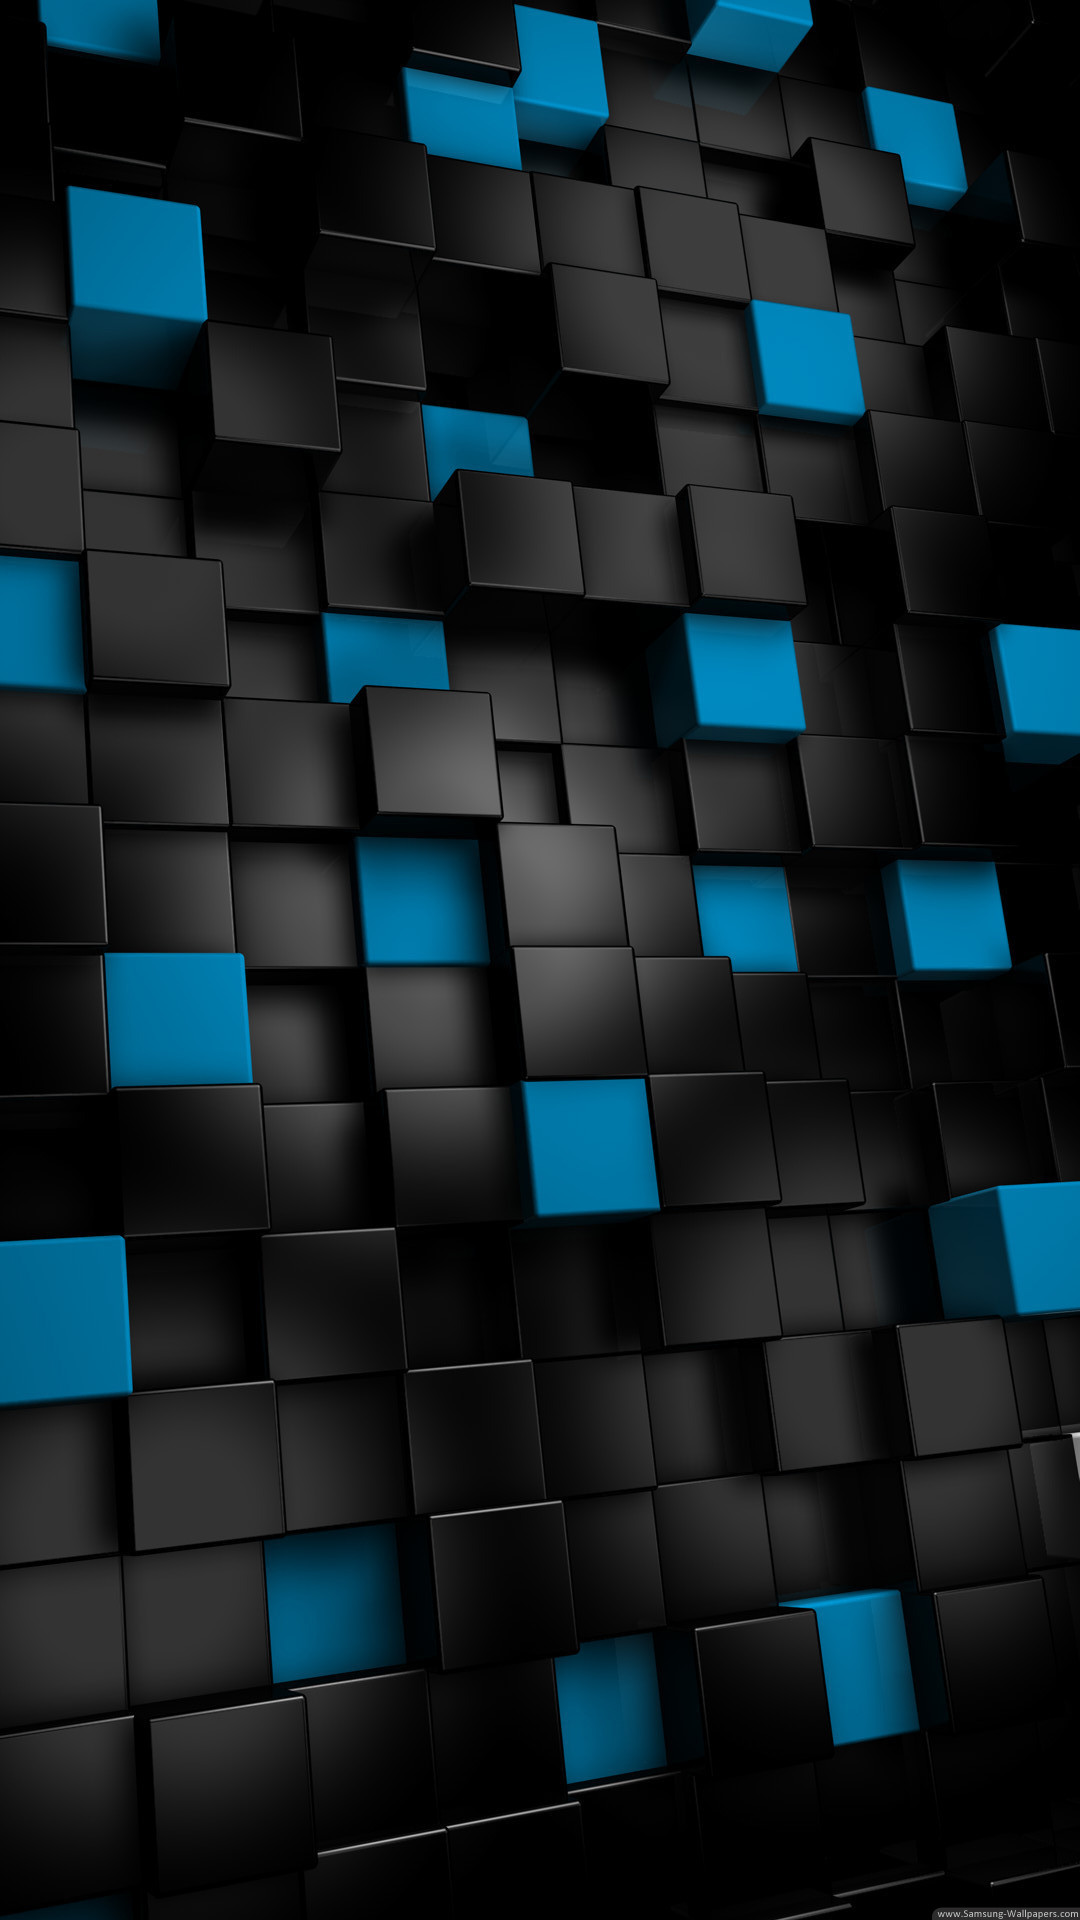 1080x1920 ... black cubes lock screen  samsung galaxy s5 wallpaper ...